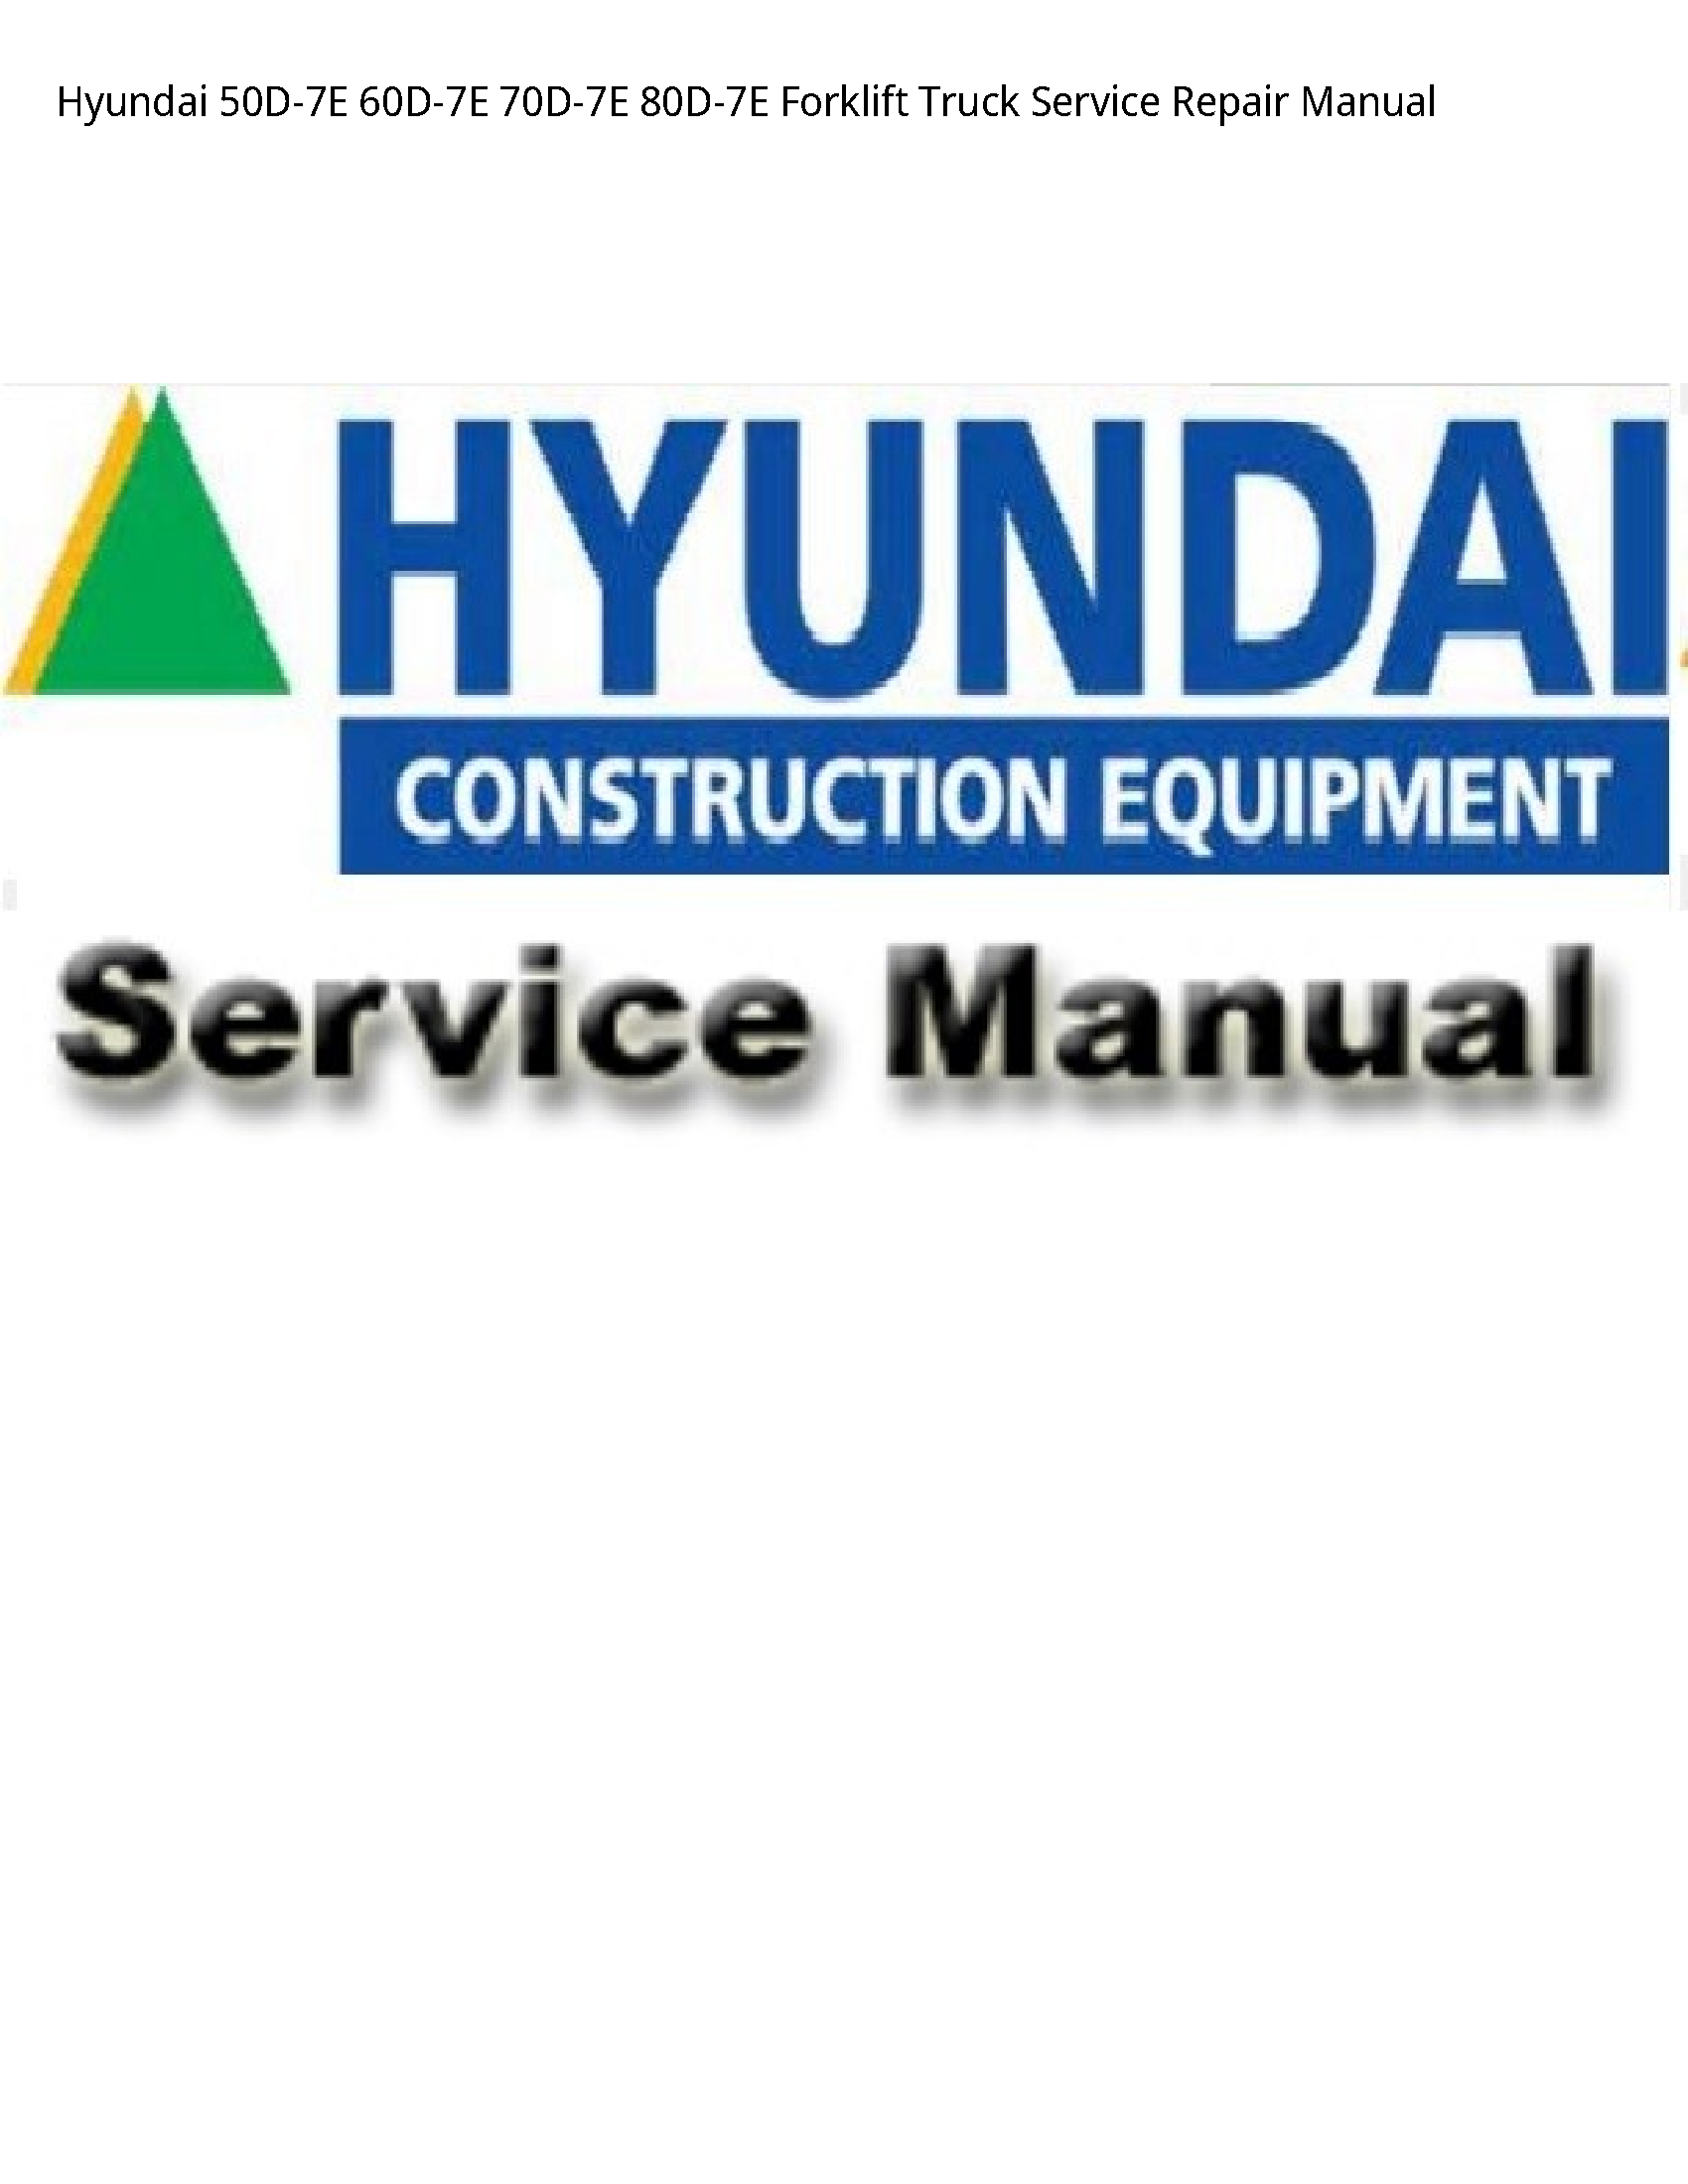 Hyundai 50D-7E Forklift Truck manual